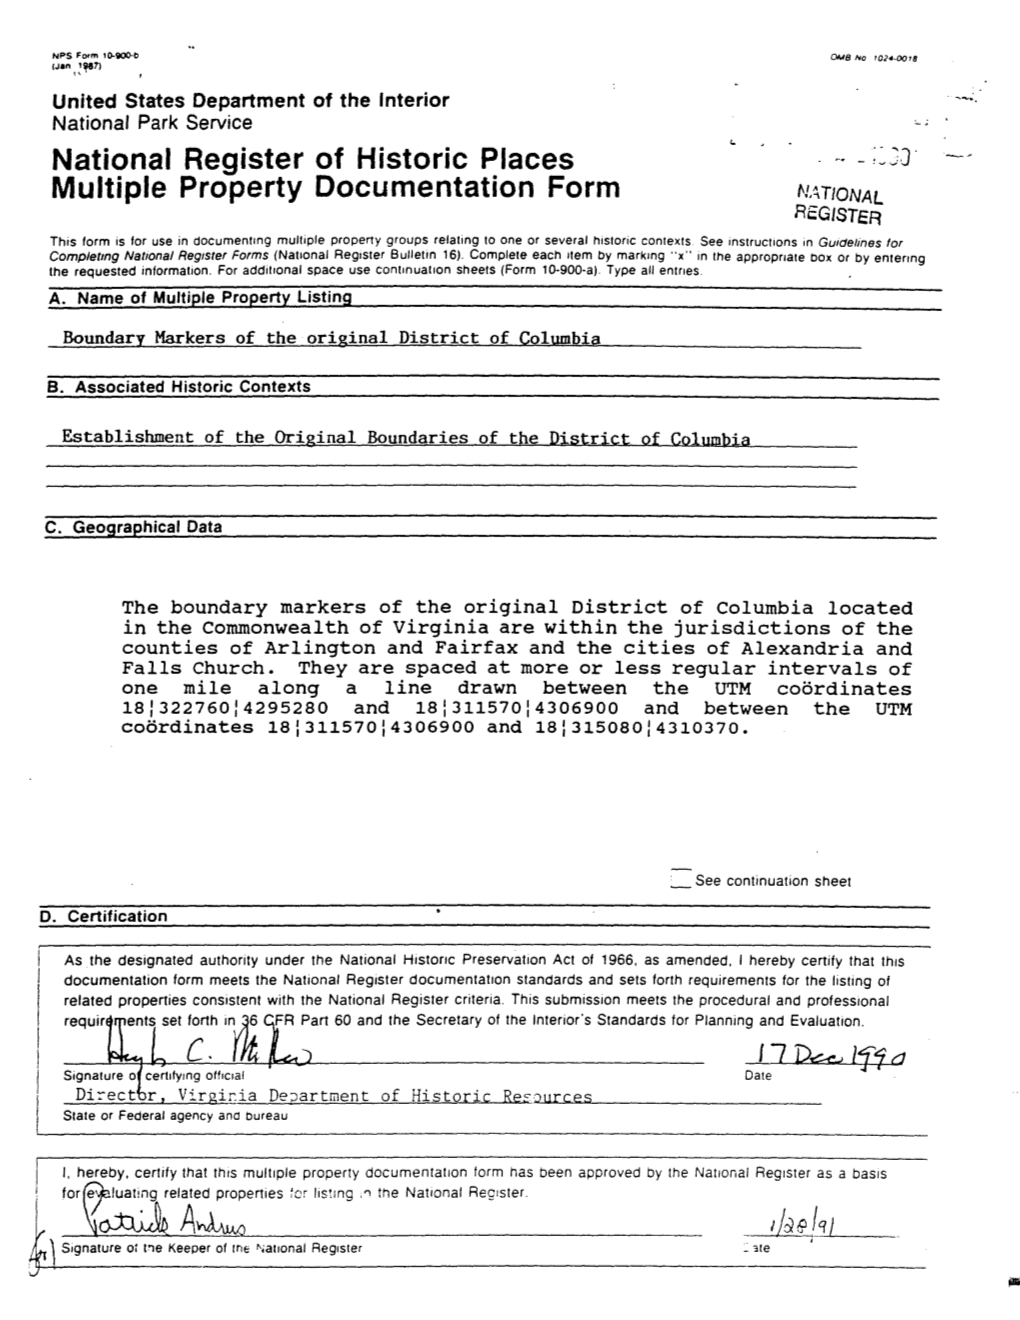 National Register of Historic Places Multiple Property Documentation